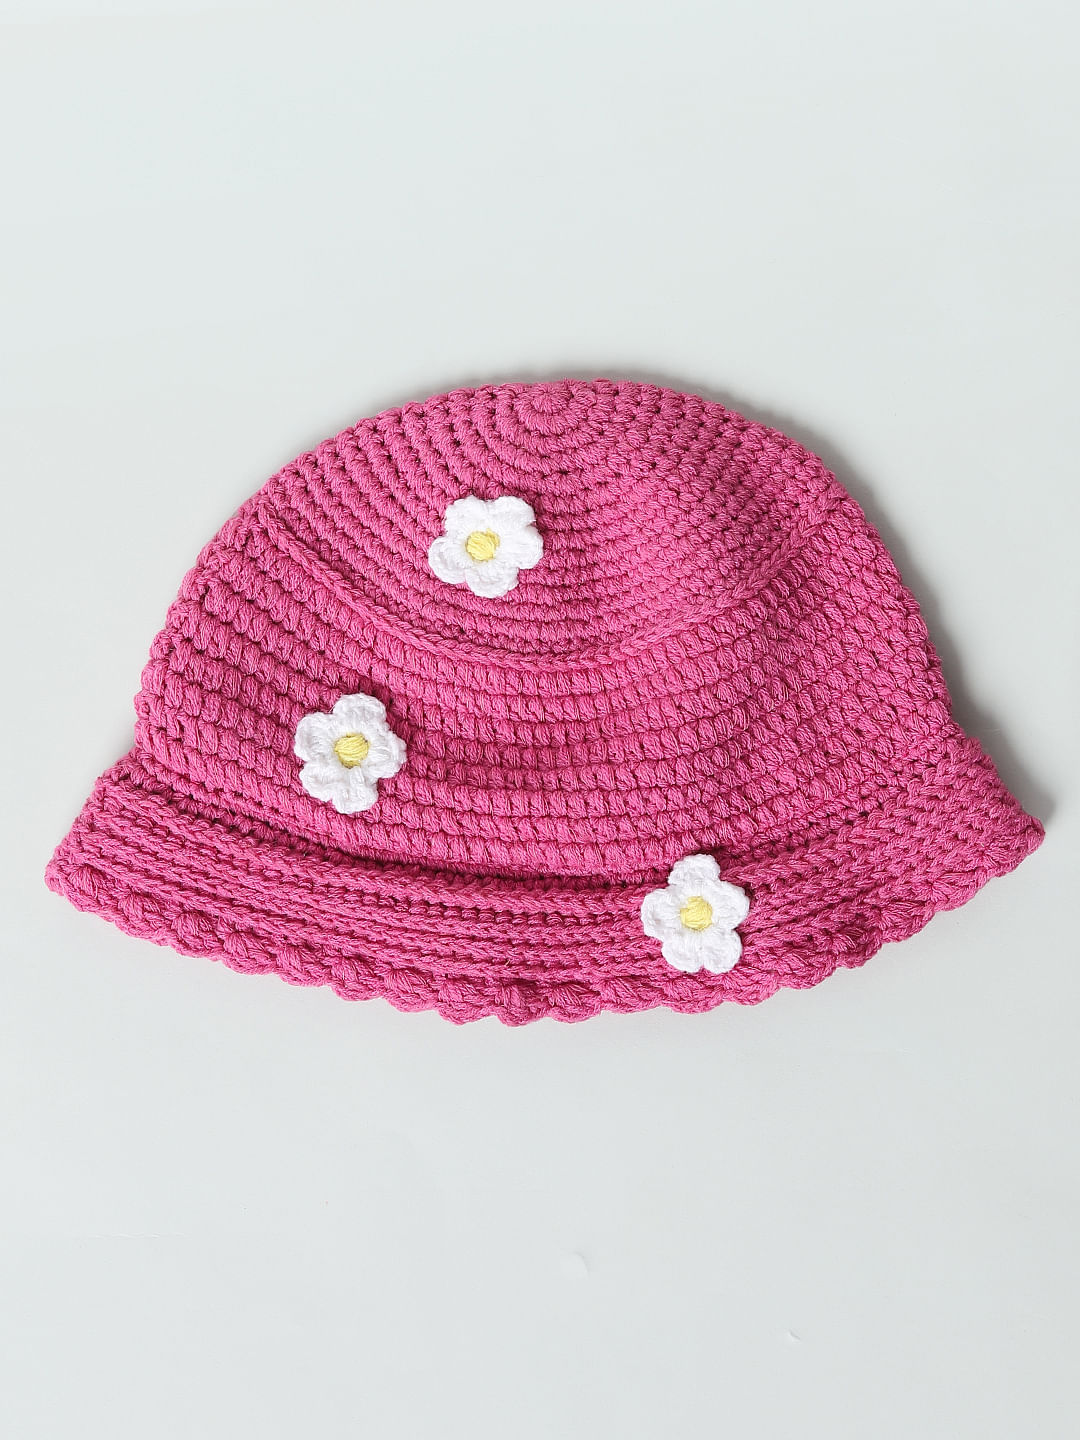 Knit Bucket Hat Crochet Hat Handmade Bucket Hat Colorful Hat Crochet Bucket Hat Accessories Hats & Caps Bucket Hats 